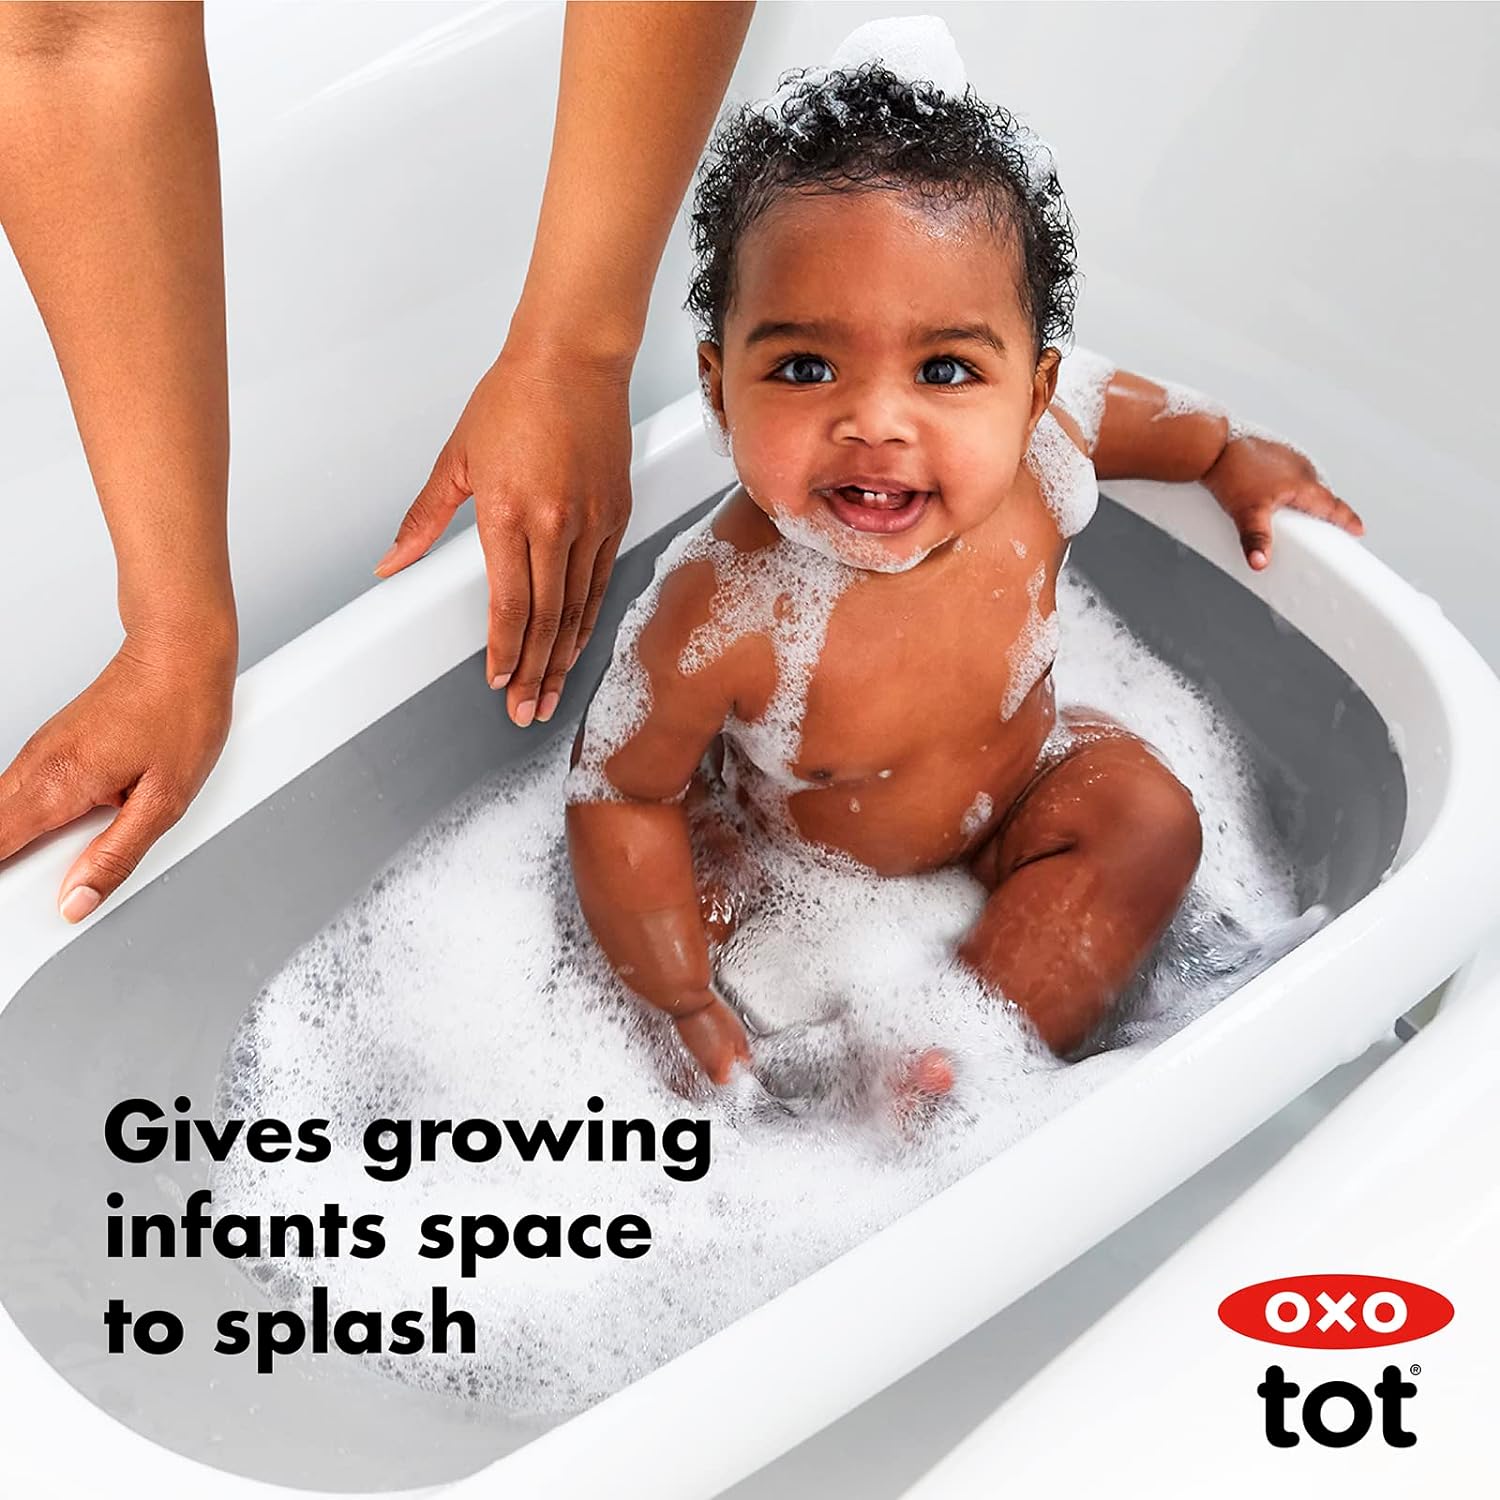 OXO Tot Splash And Store Bathtub